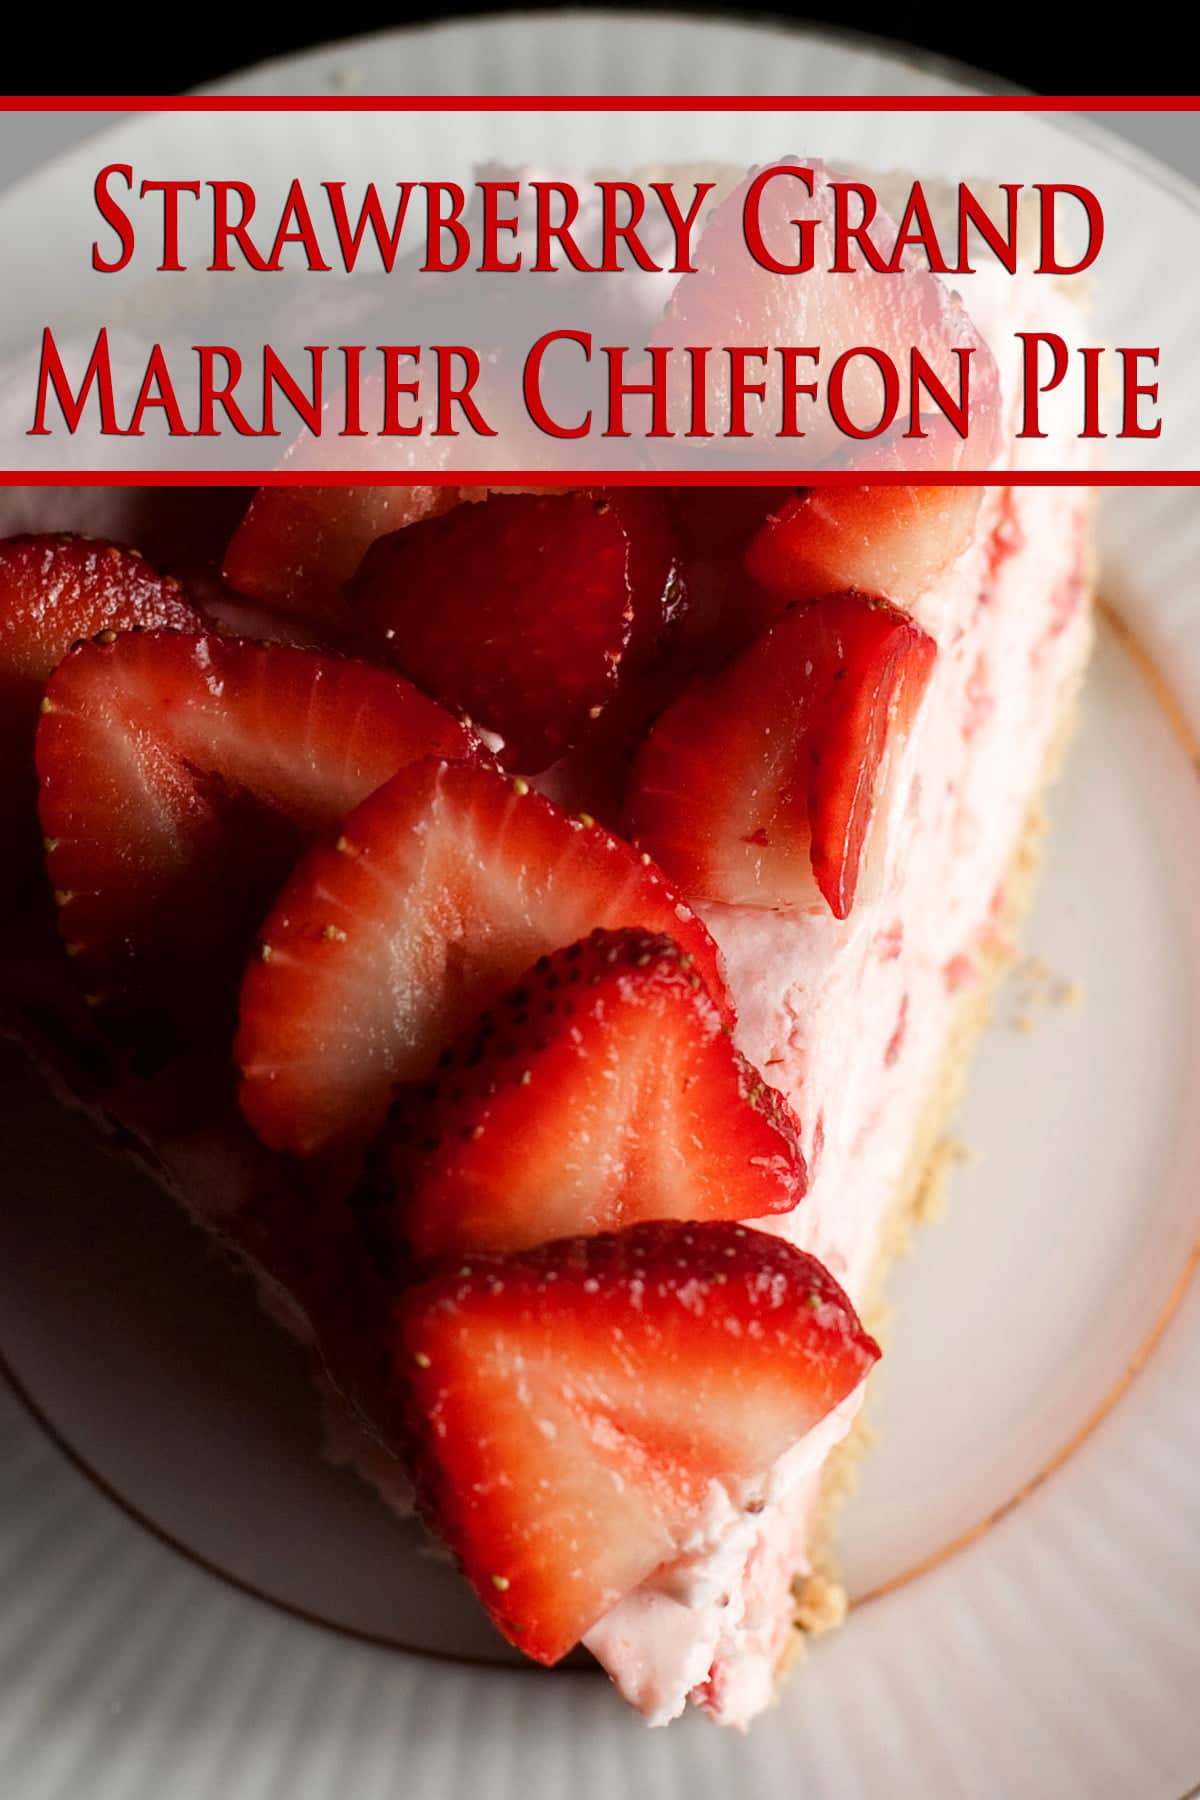 A slice of strawberry Grand Marnier Chiffon Pie on a small white plate.